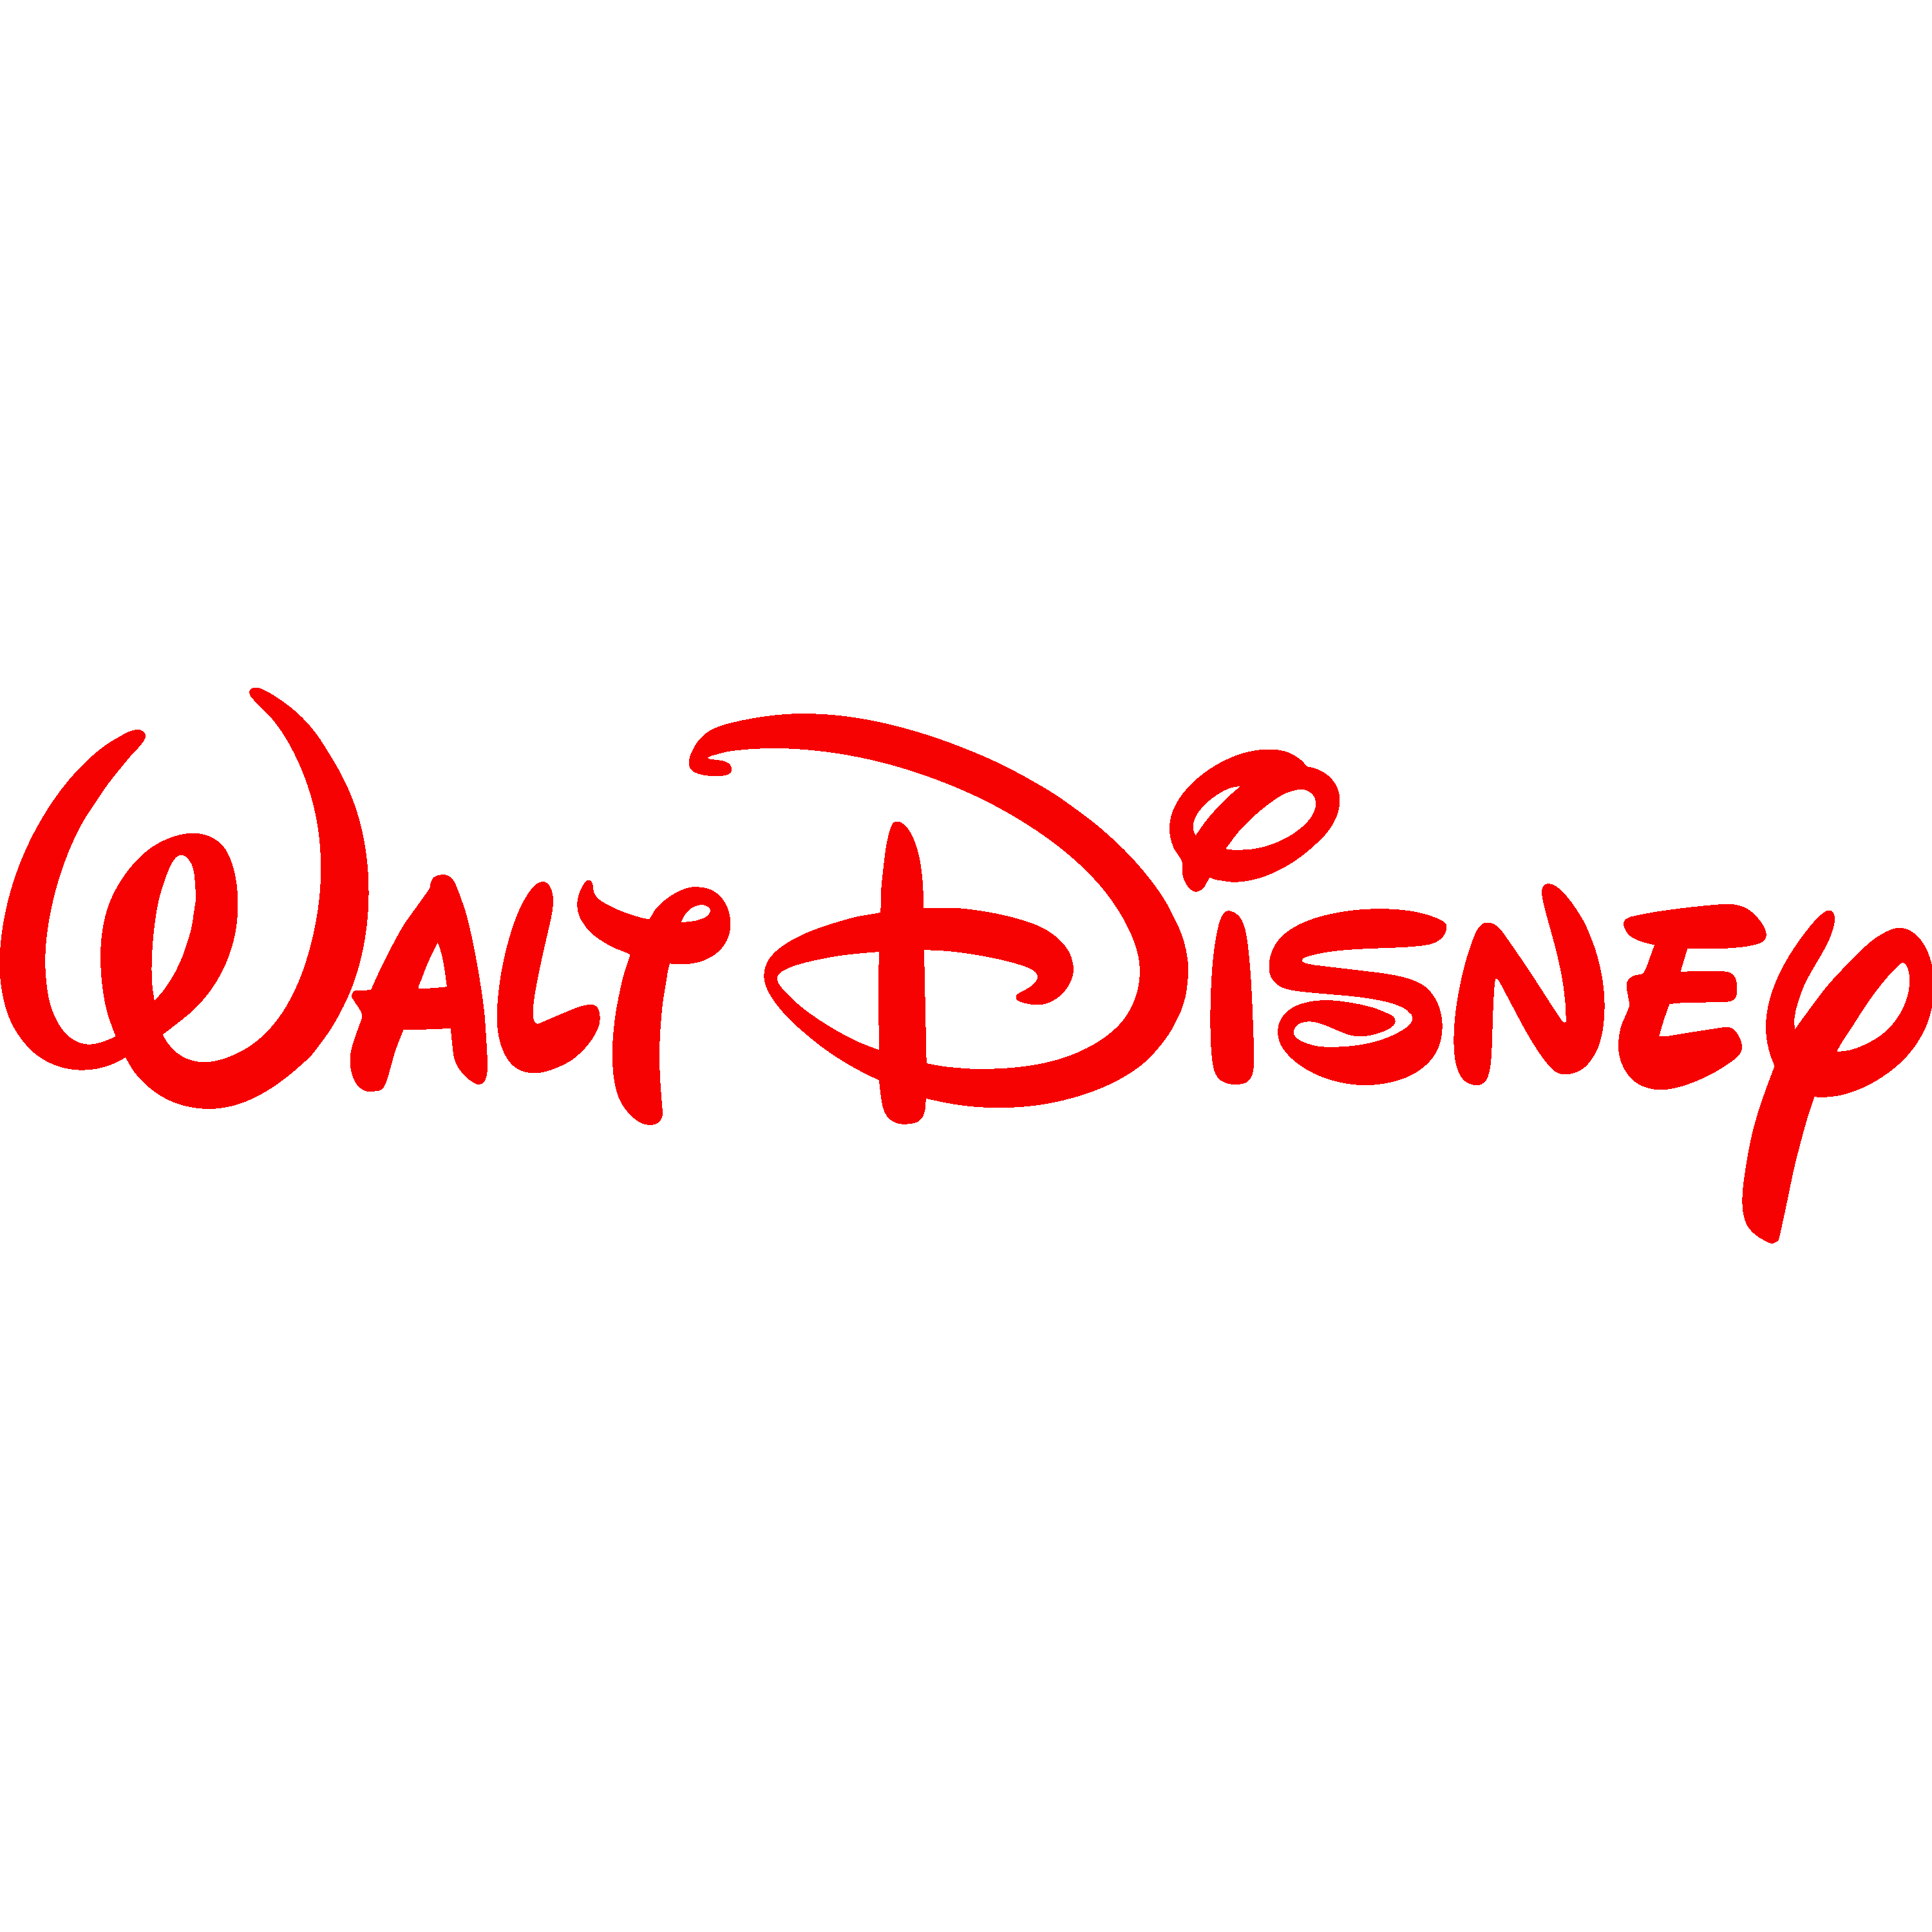 Walt Disney Logo Transparent Picture